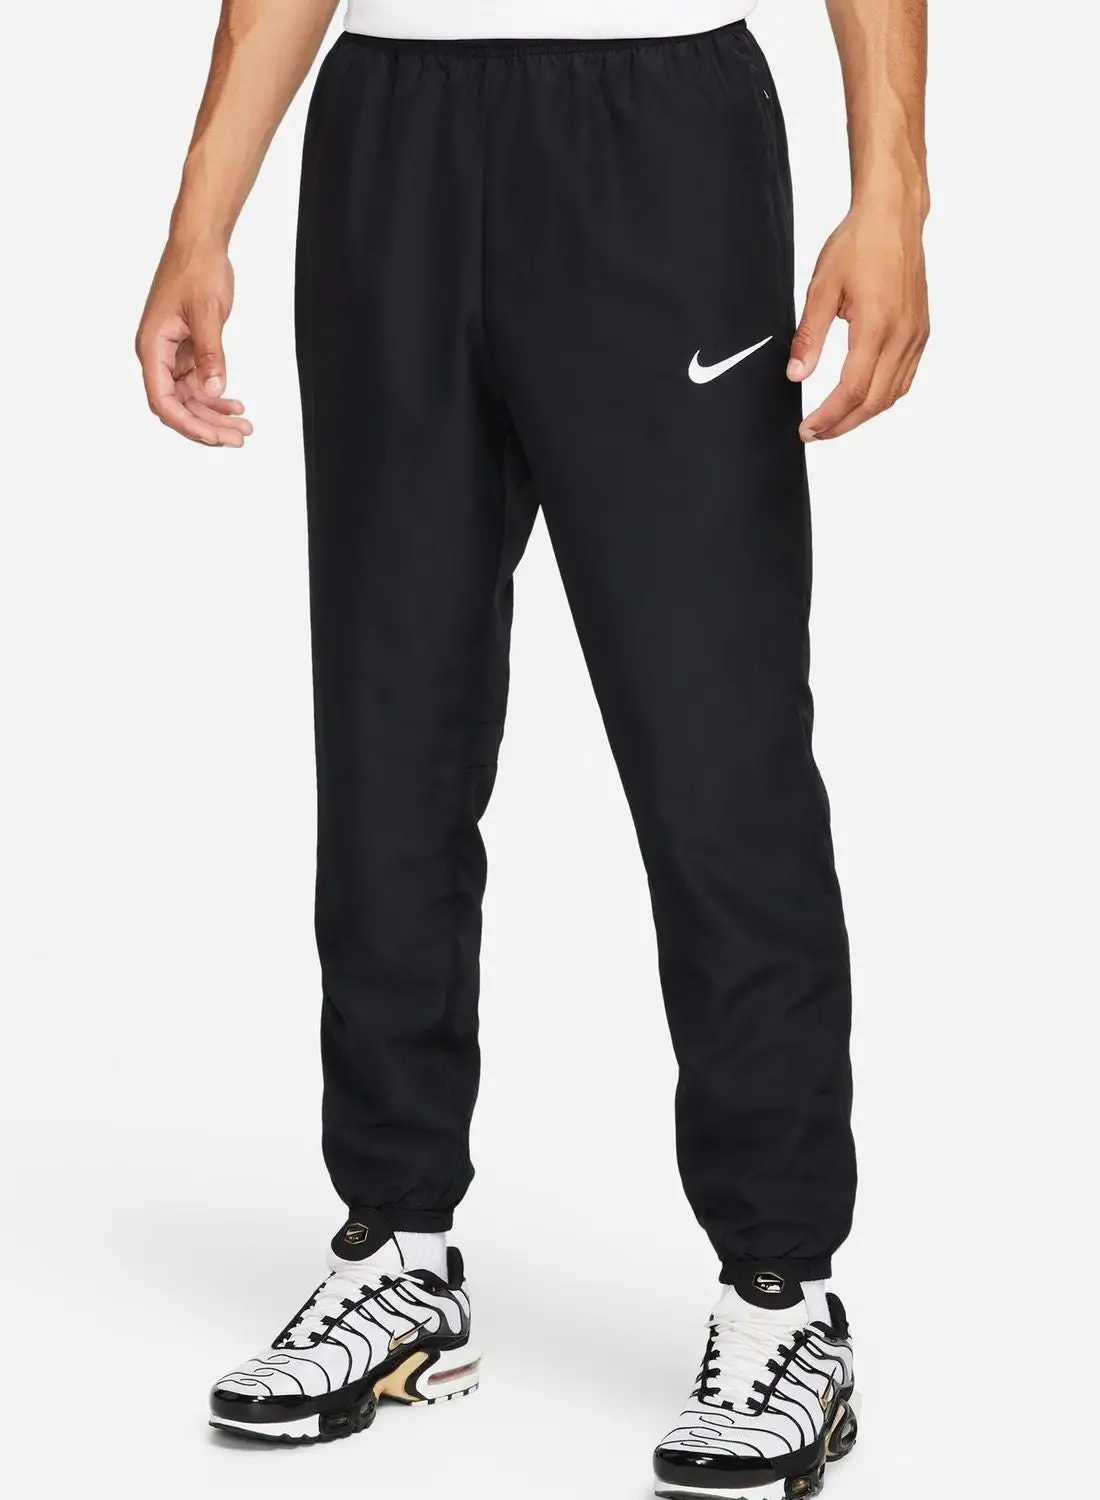 Nike Dri-Fit Acd Track Pants